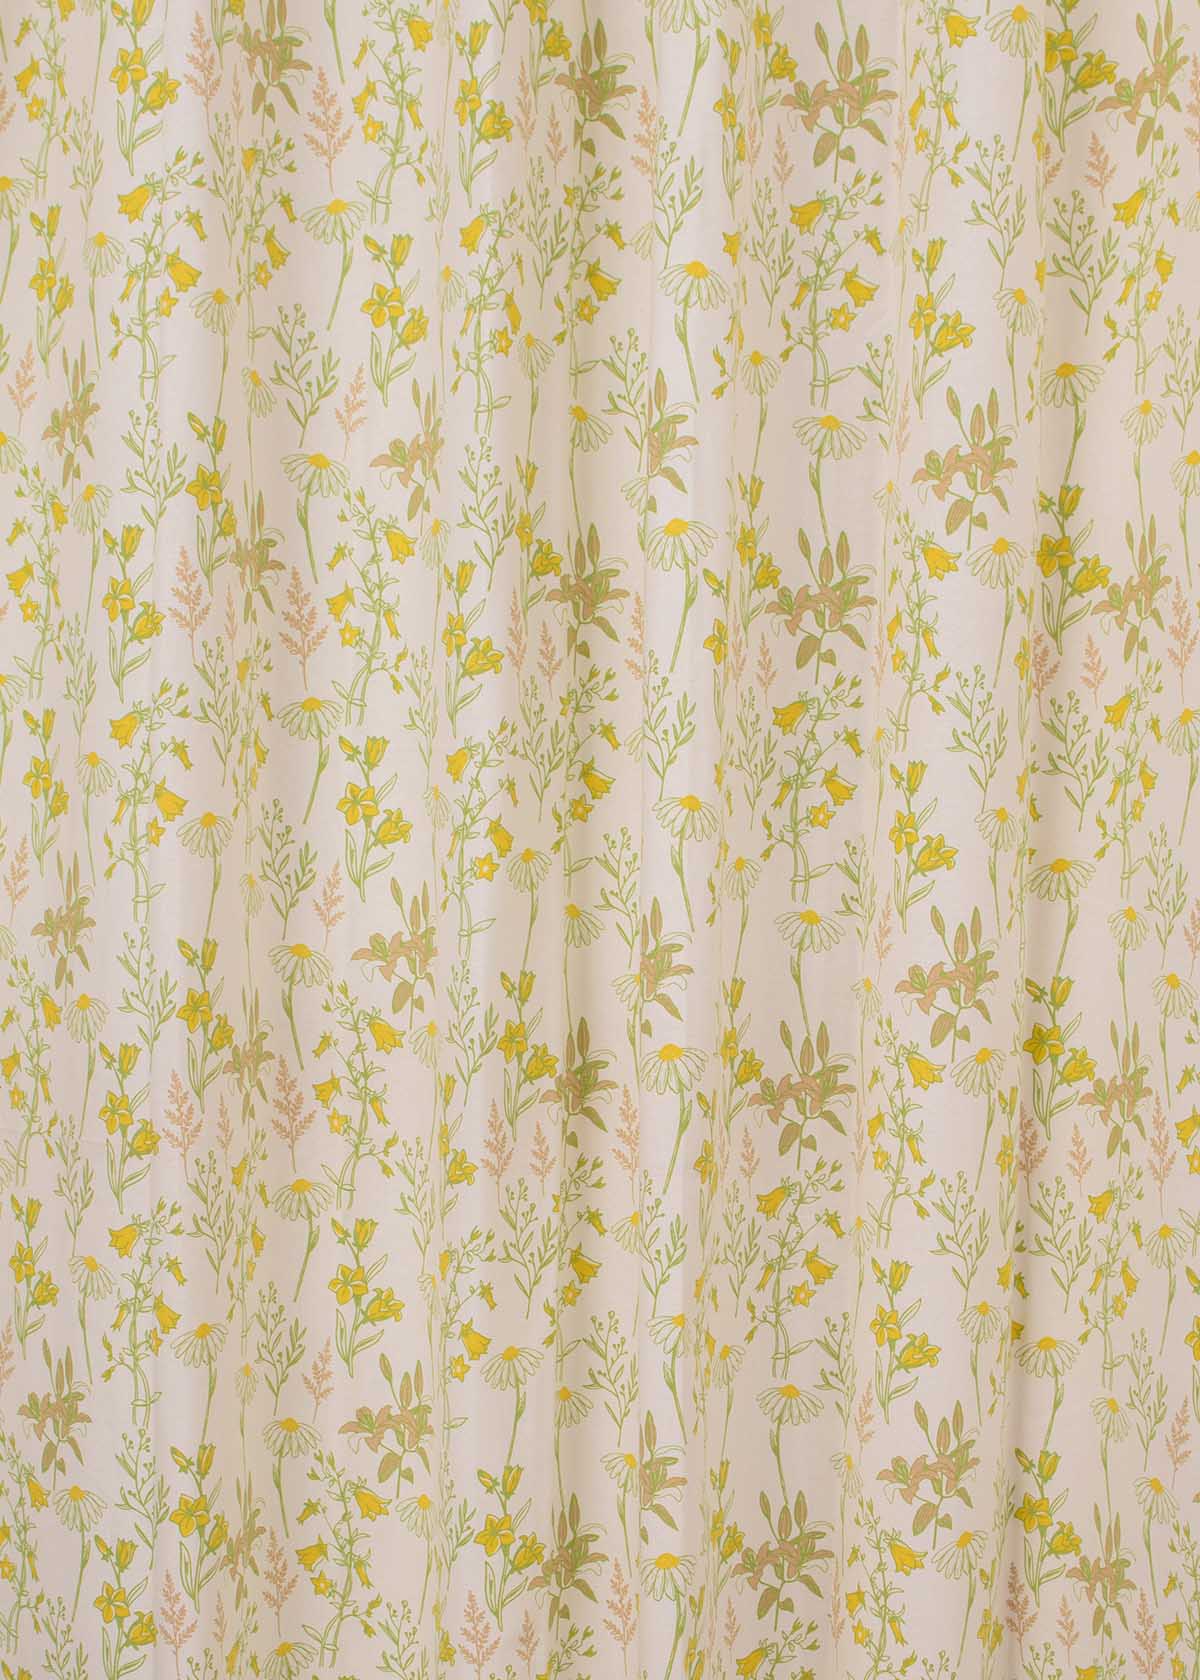 Tulip Garden 100% Customizable Cotton floral curtain for kids room, living room & bed room - Room darkening